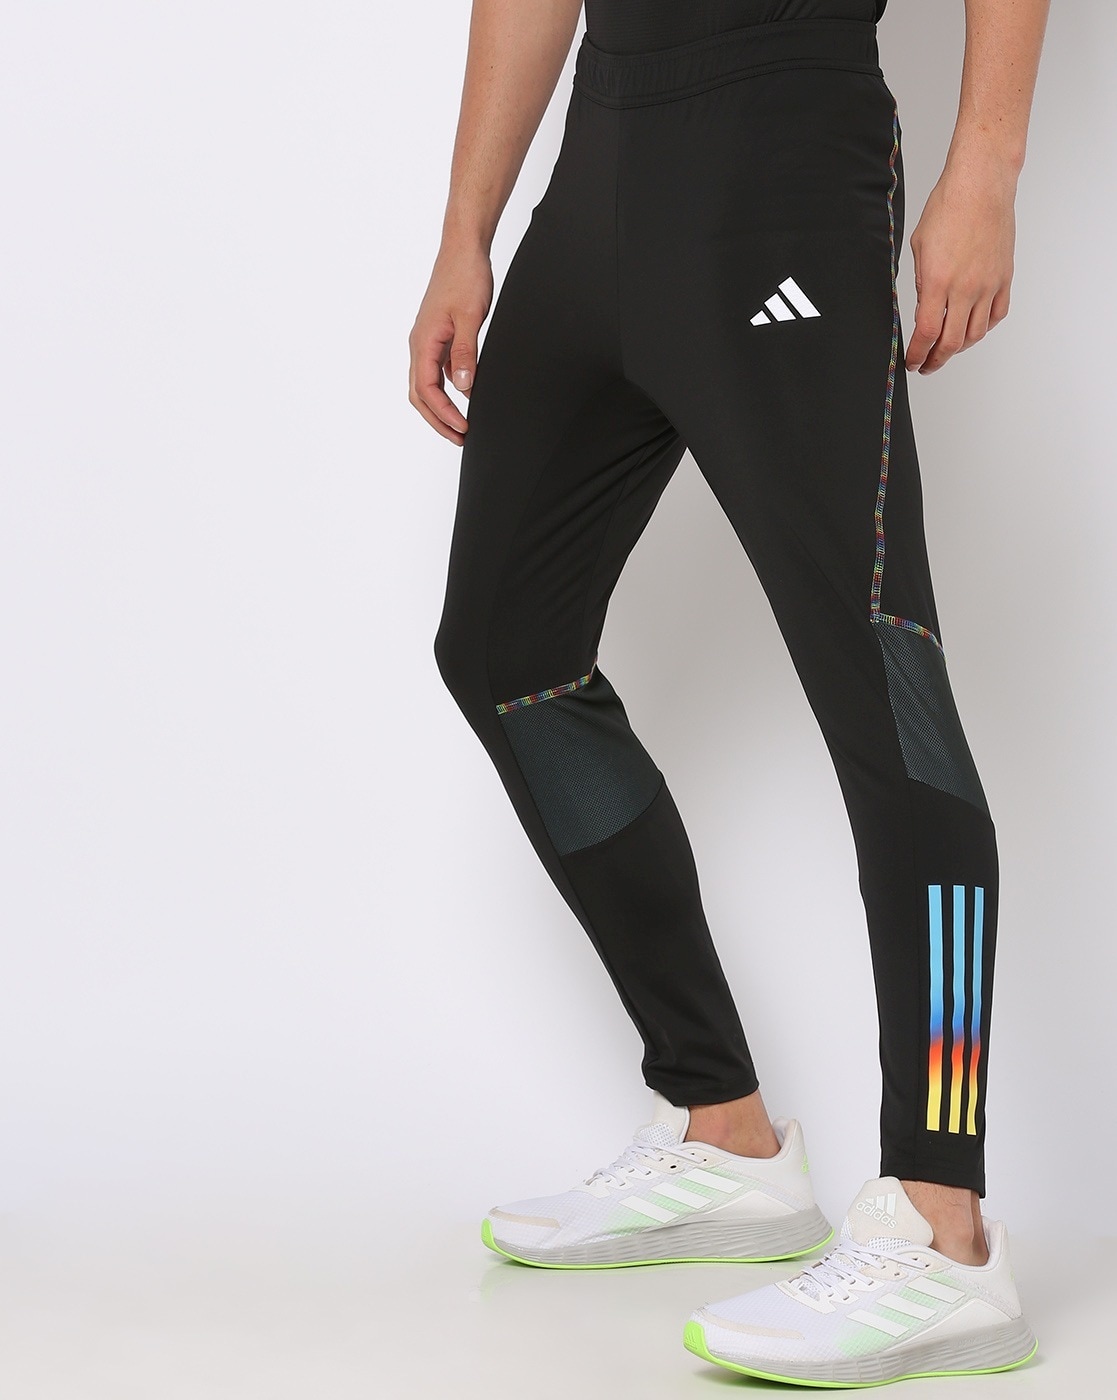 Quần Adidas Nam Chính Hãng - SPRT Comfort 3-Stripes Sweat Pants - Đen |  JapanSport H31238